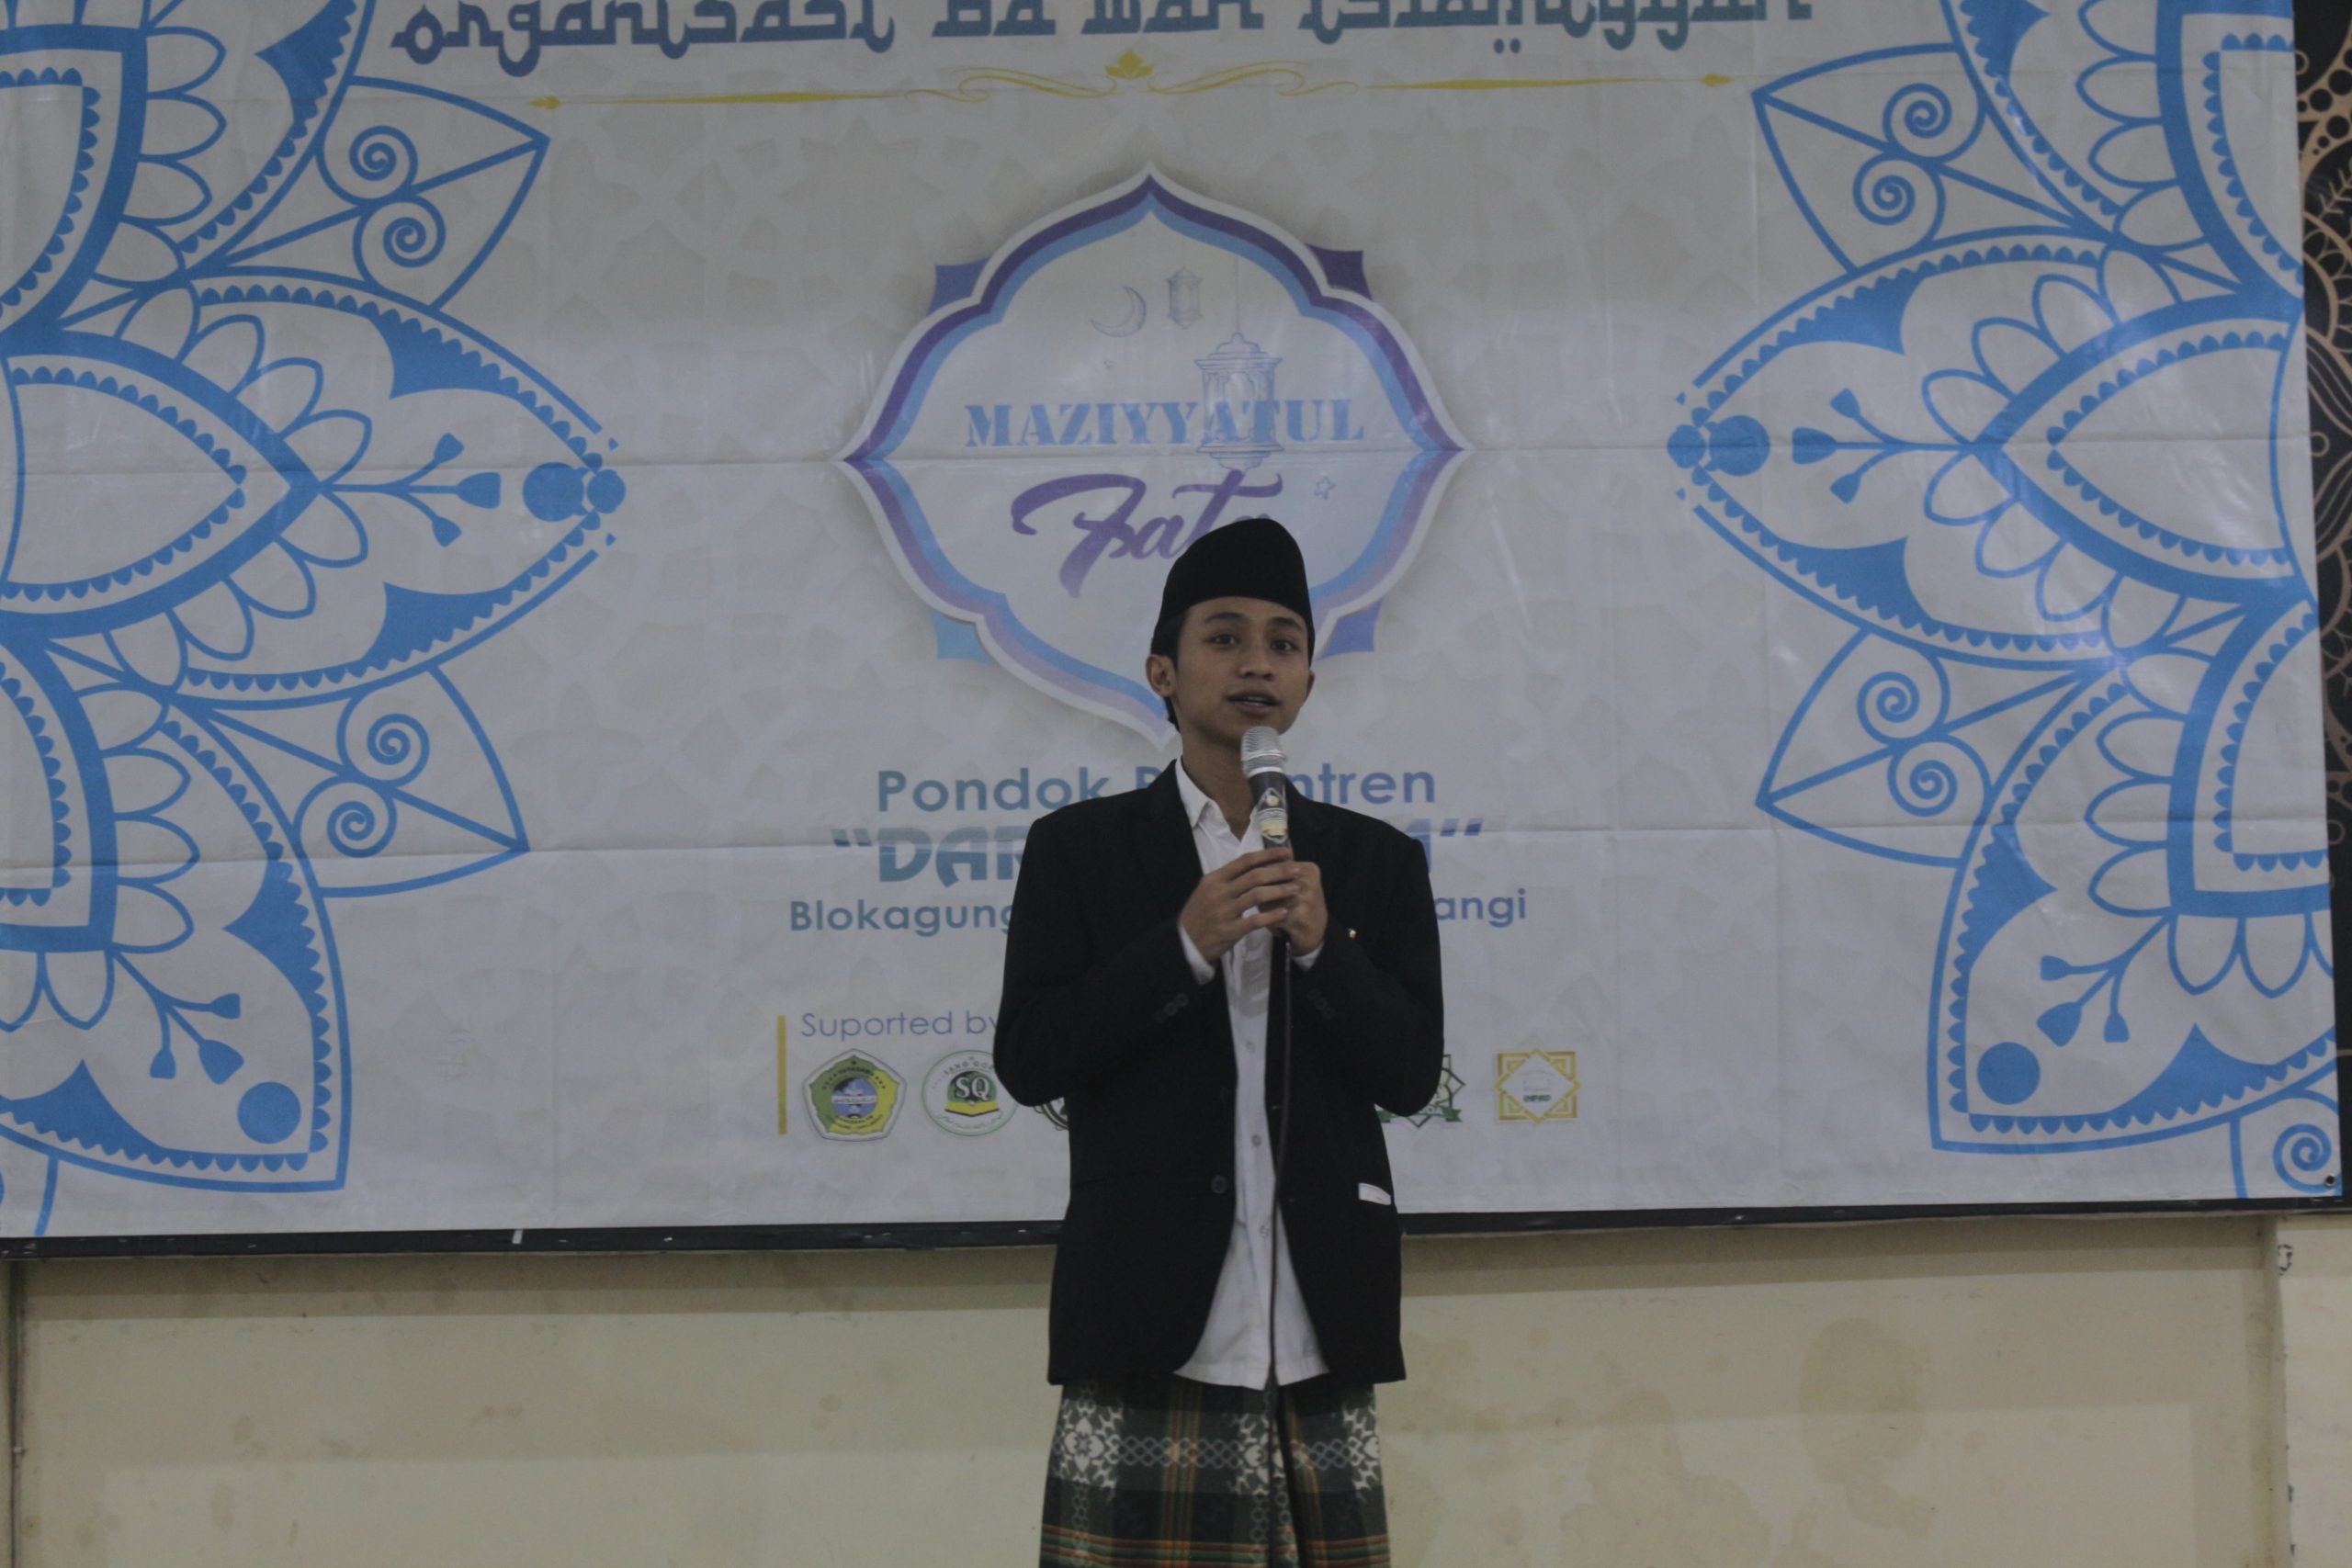 Organisasi Dakwah Islamiyyah Maziyyatul Fata Gelar Diklat MC dan Launching Antologi MC